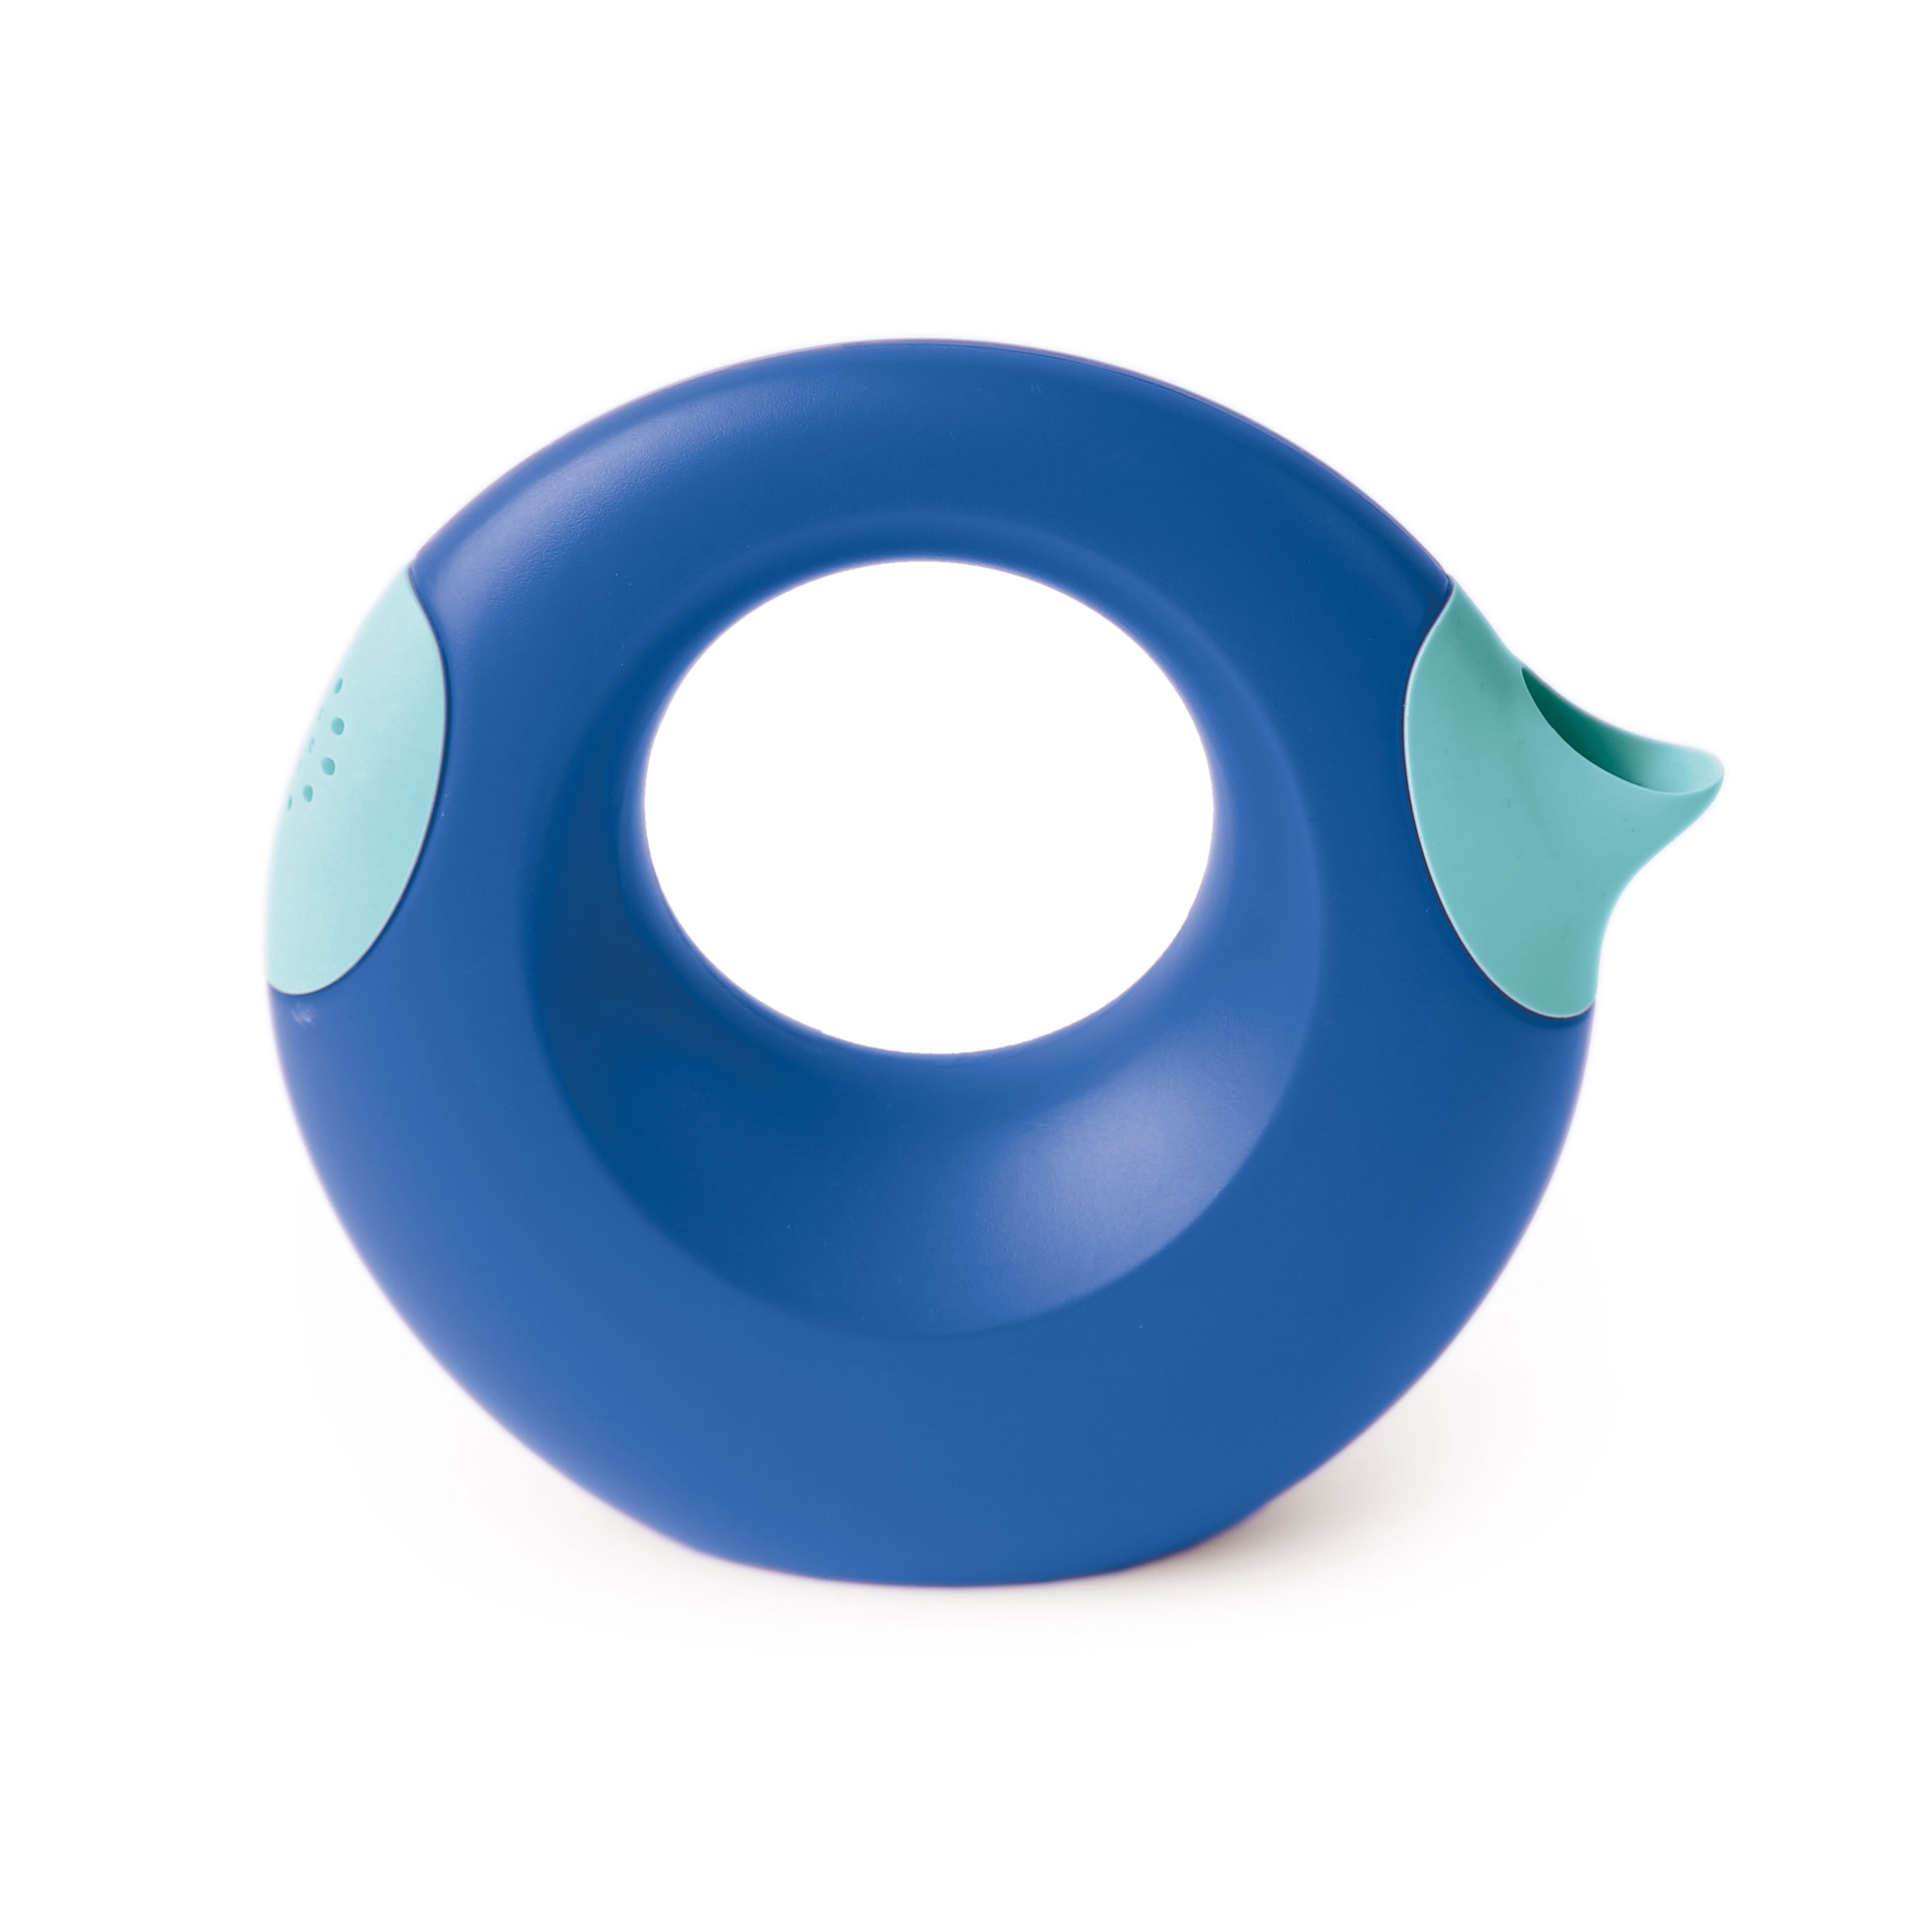 Gießkanne "Cana" 1 L blau - Quut Sandspielzeug 